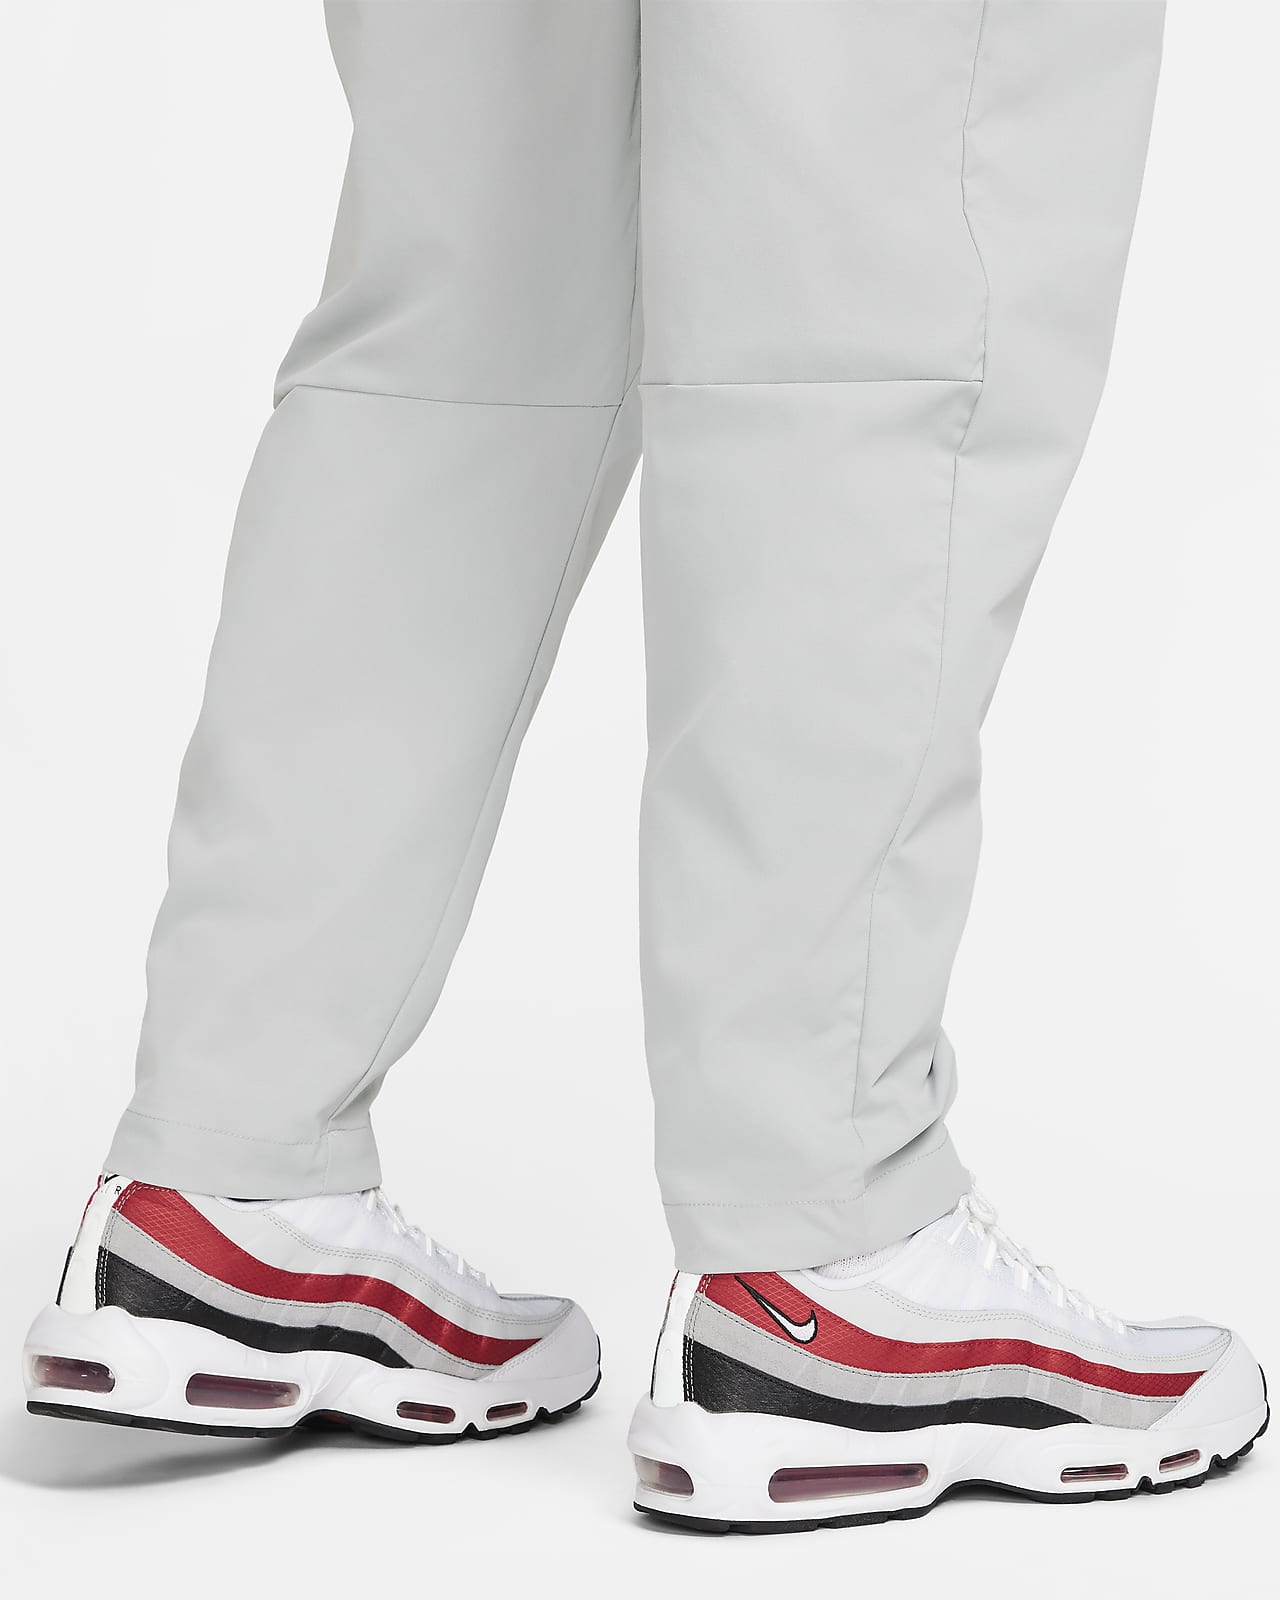 Nike Club Men's Woven Tapered Leg Pants.